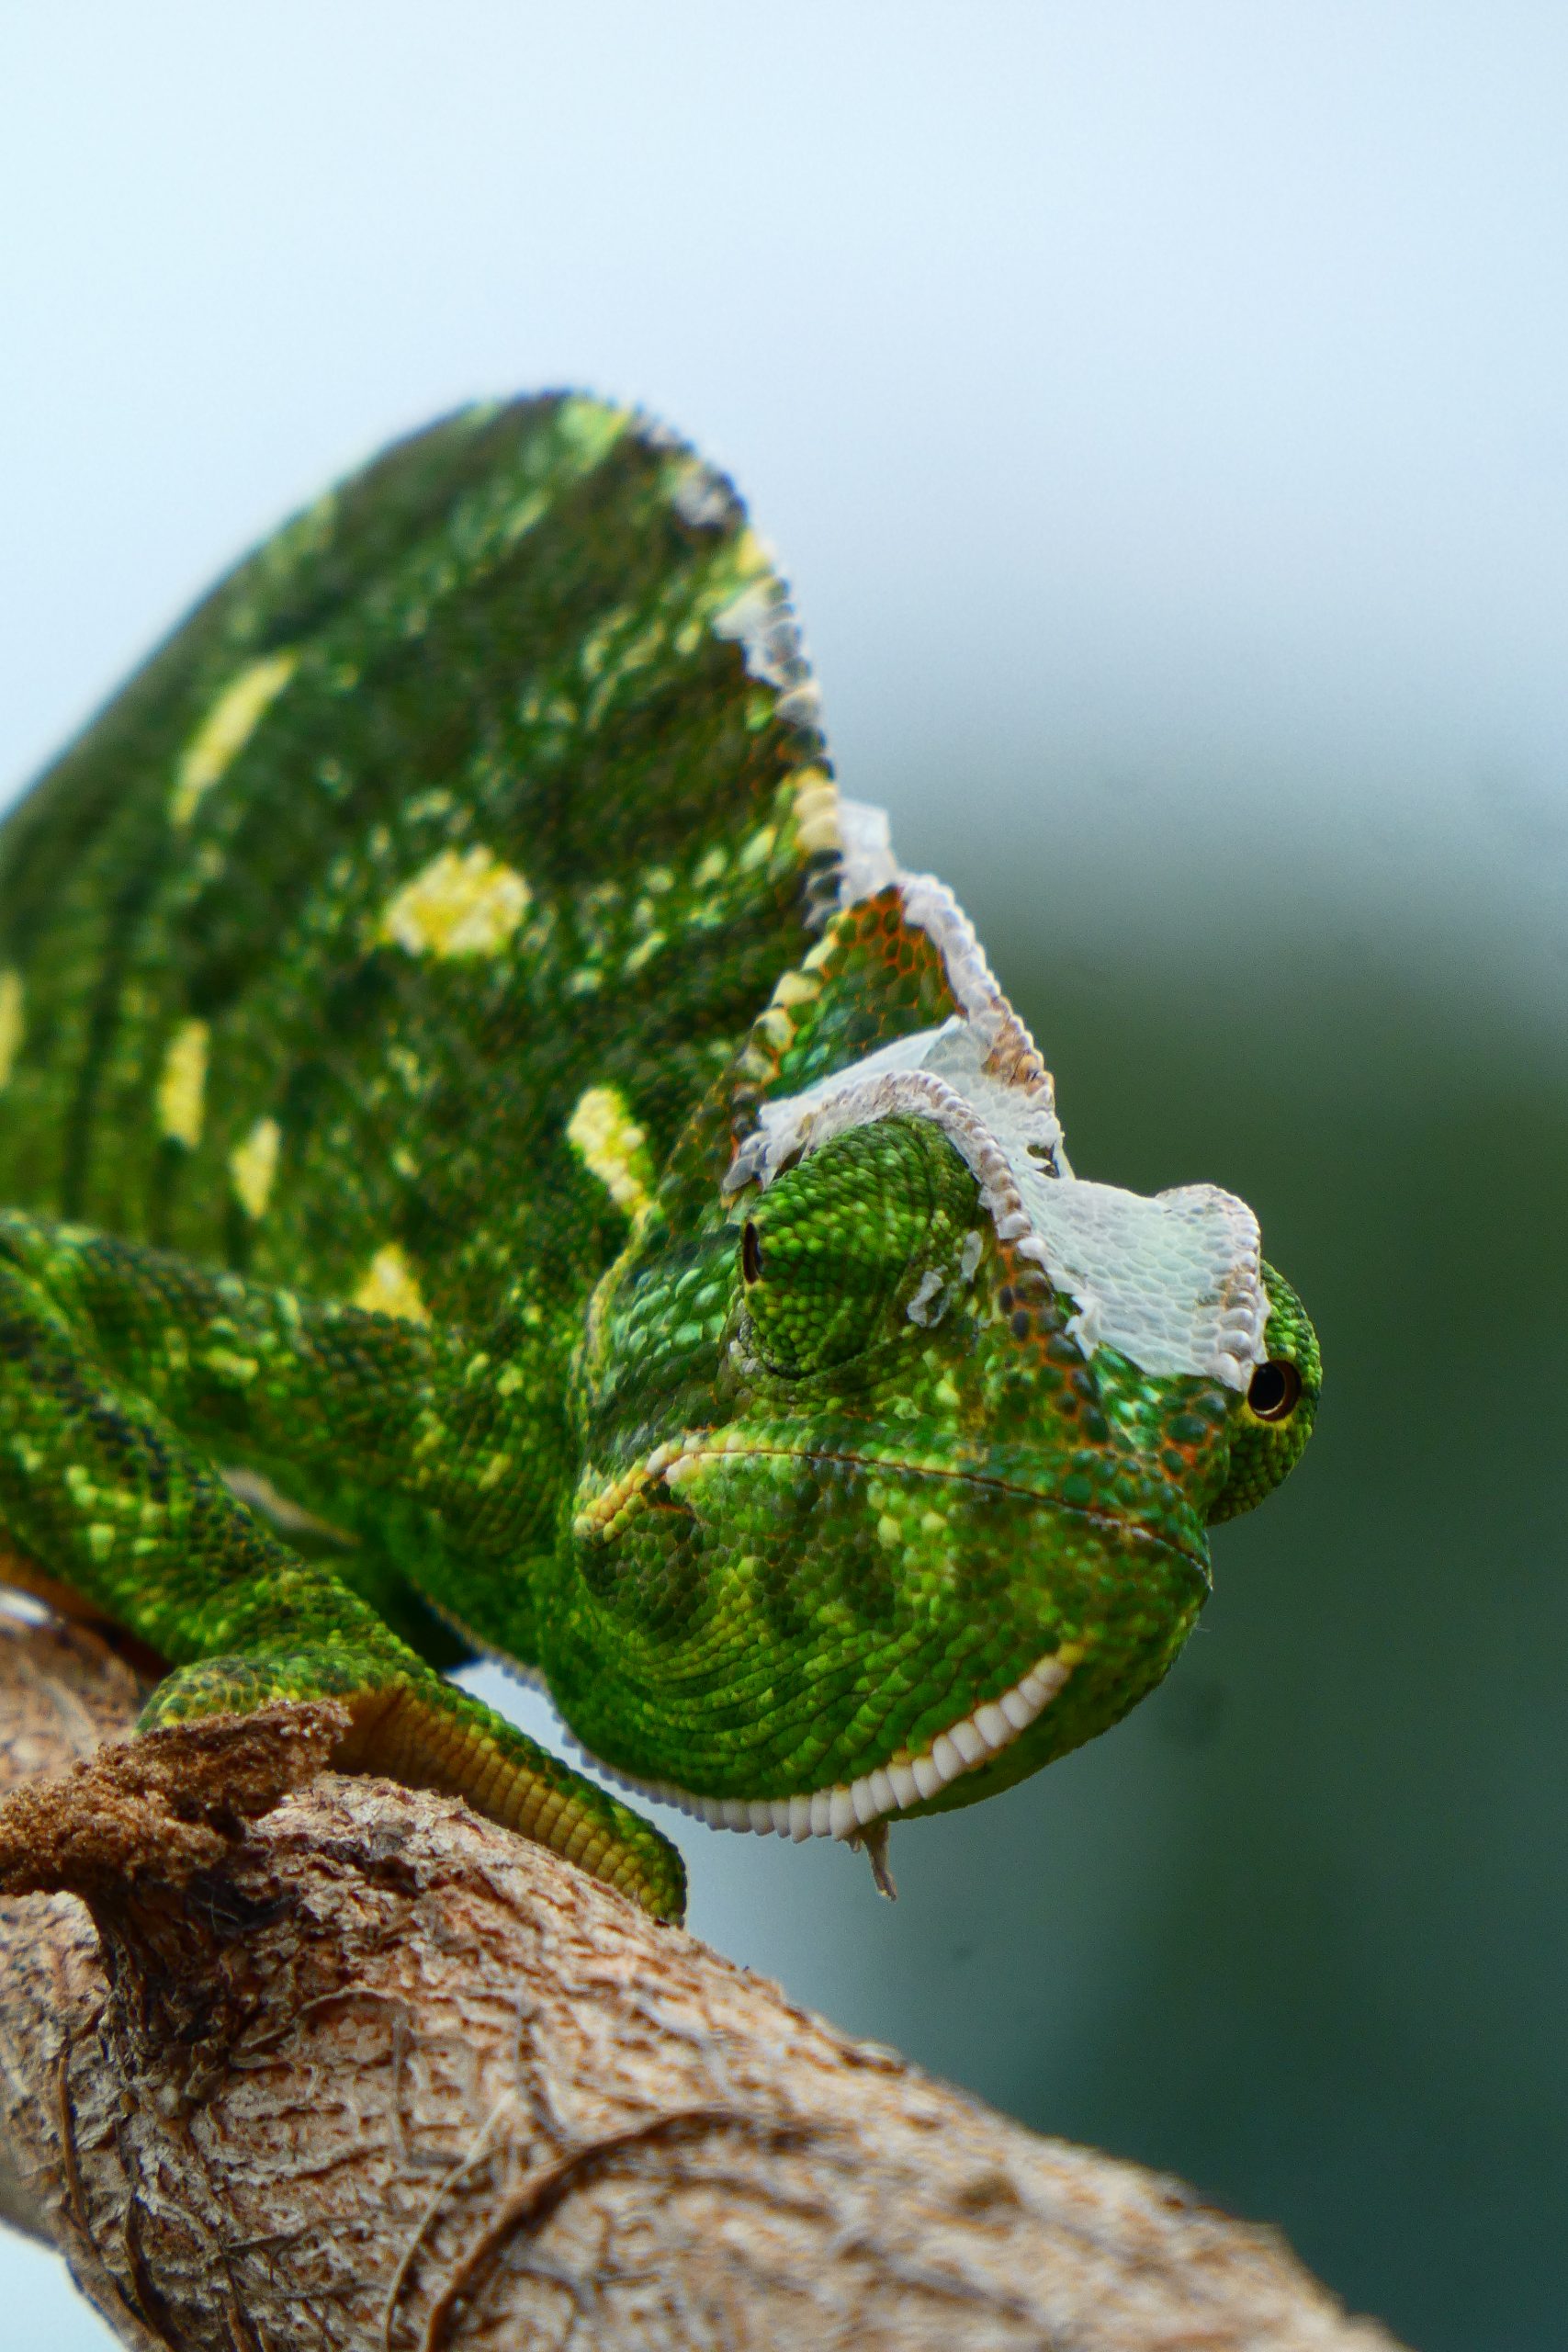 close-up of a chameleon